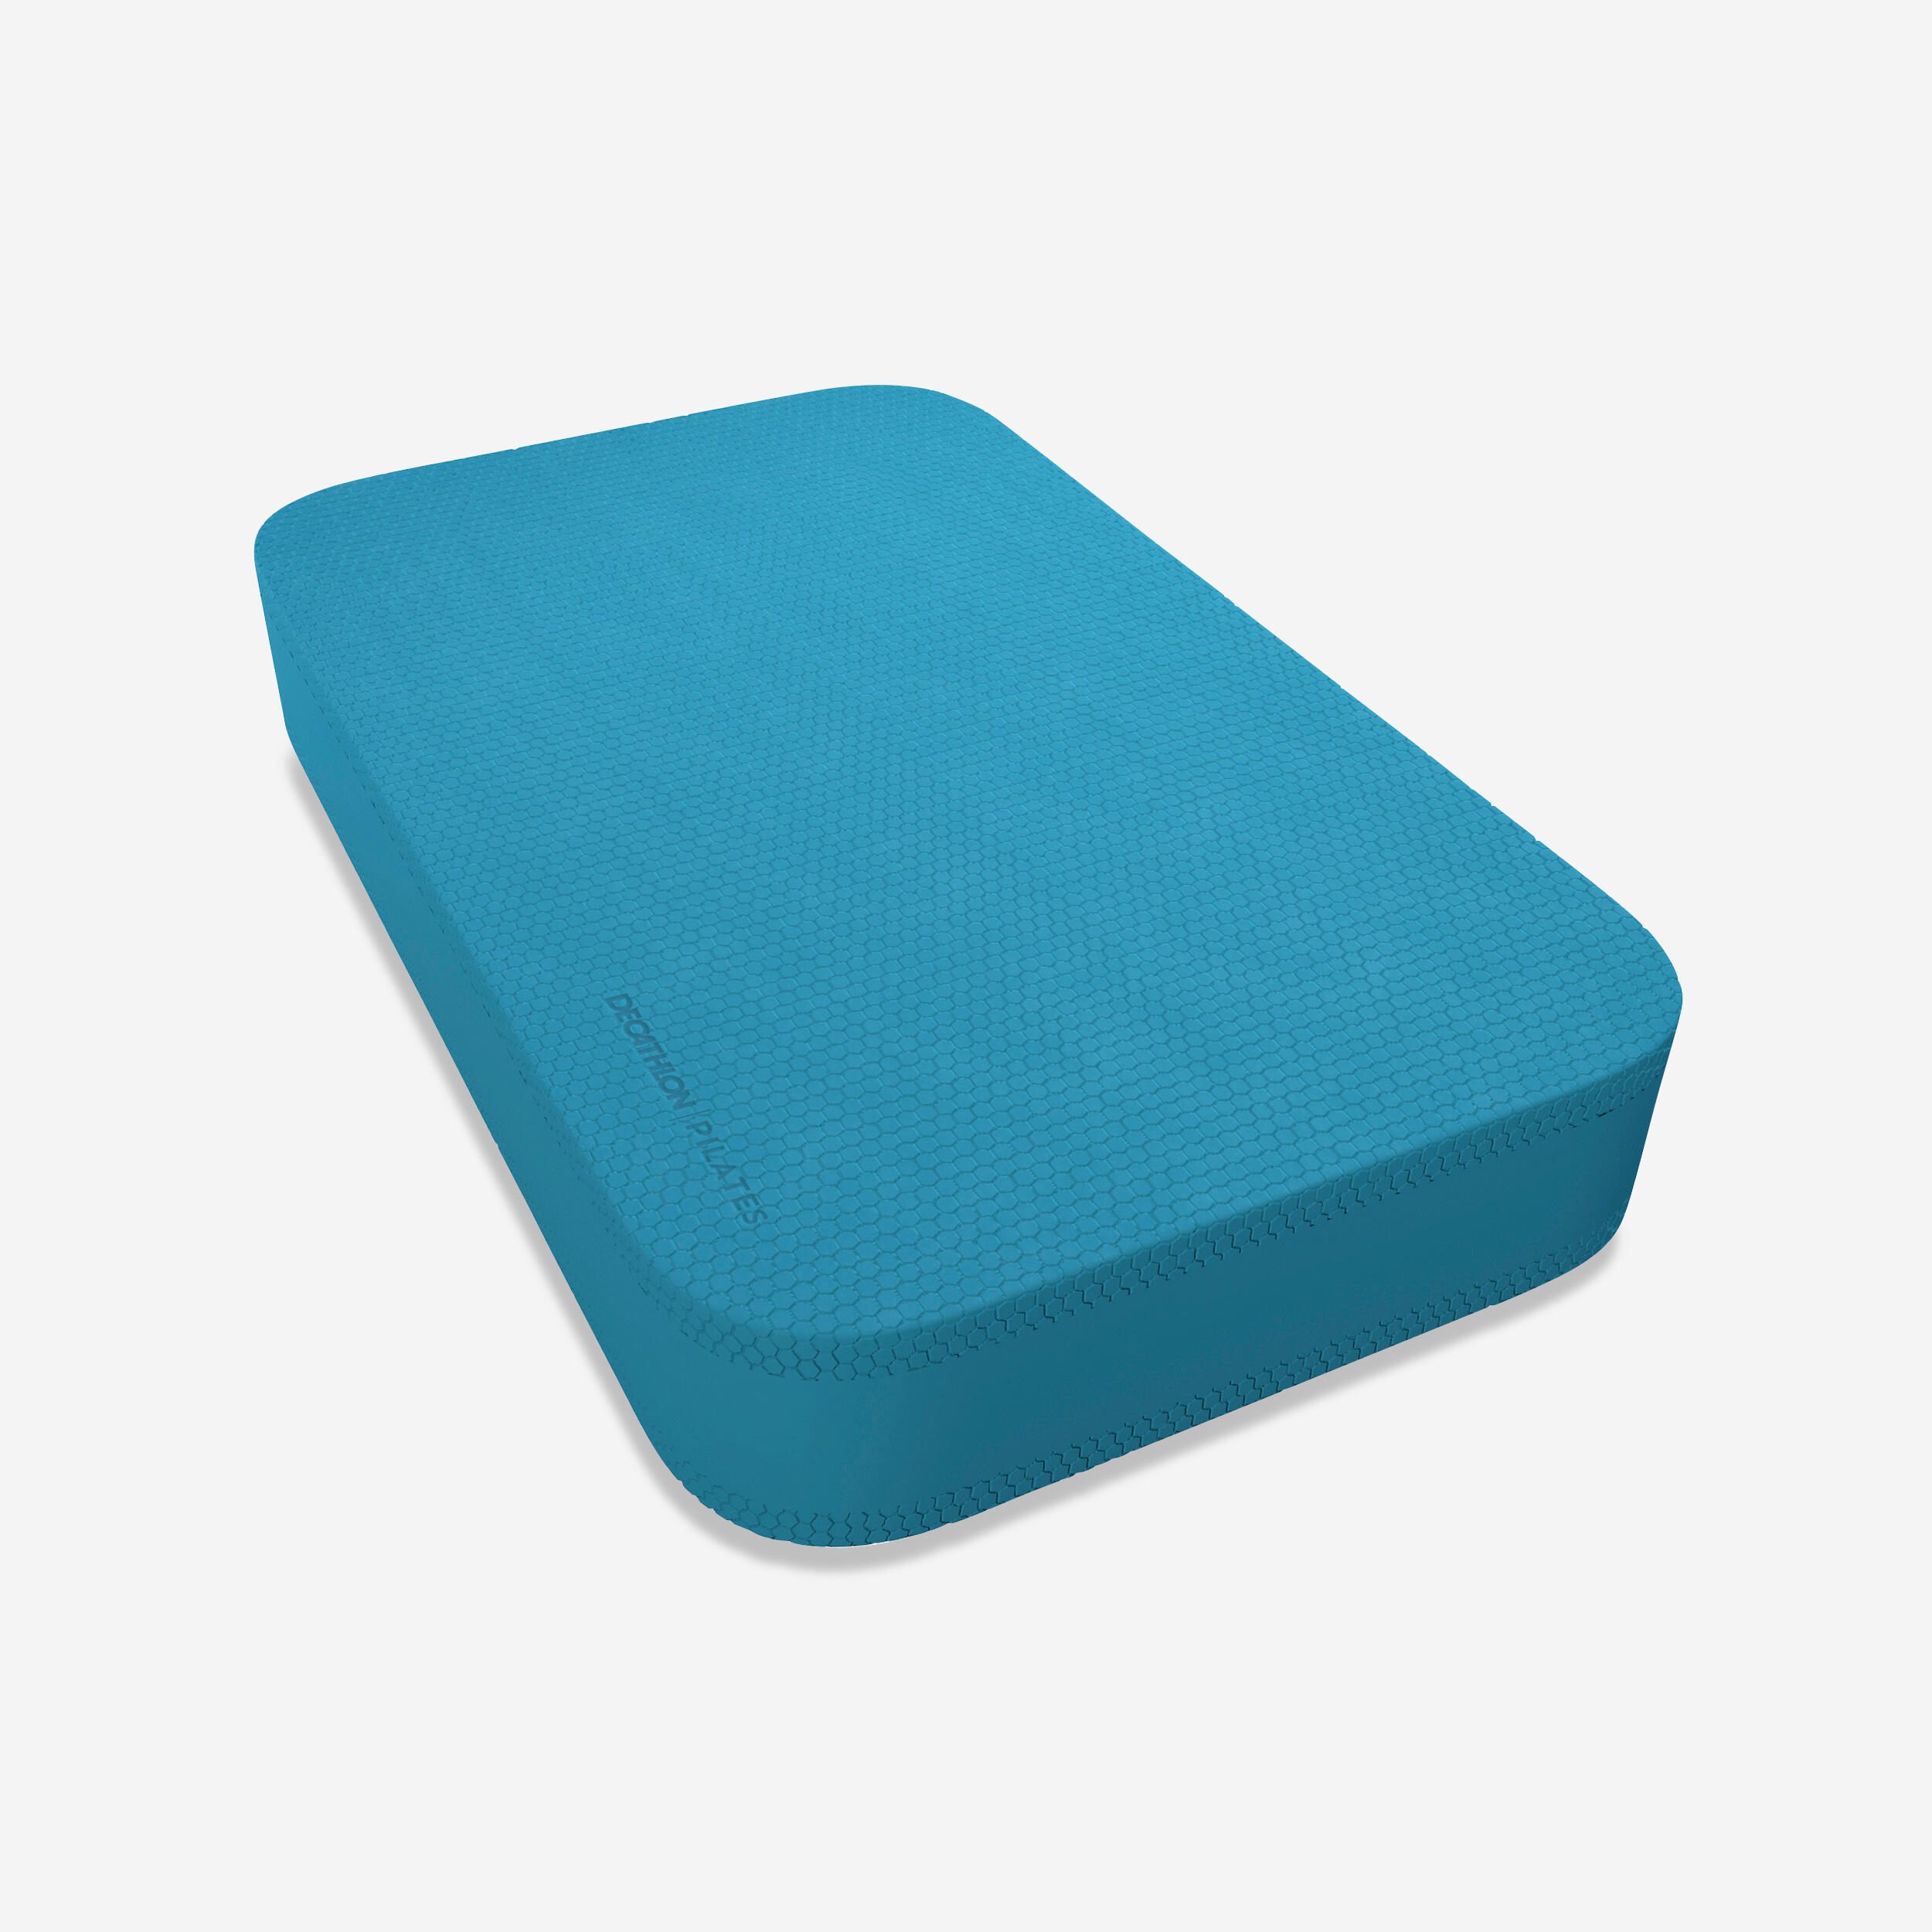 DOMYOS Fitness Small Balance Pad (39 cm x 24 cm x 6 cm) - Blue